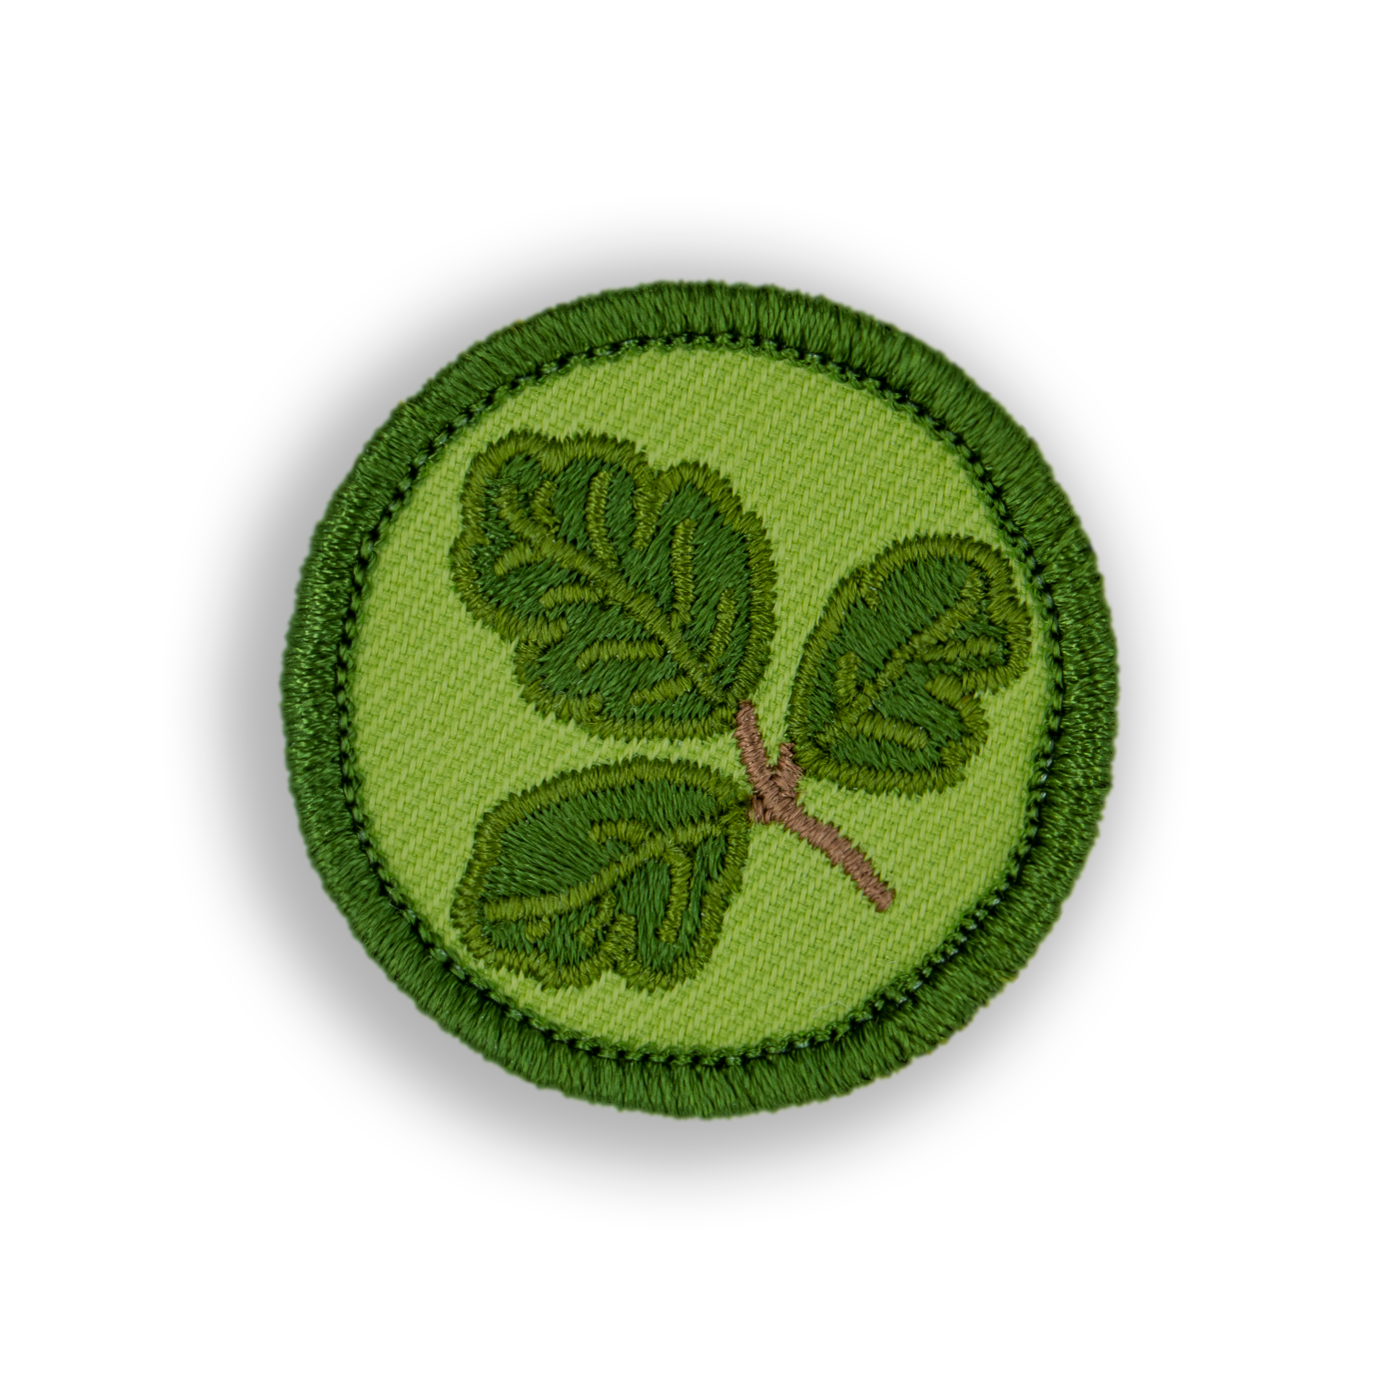 Poison Oak Patch | Demerit Wear - Fake Merit Badges